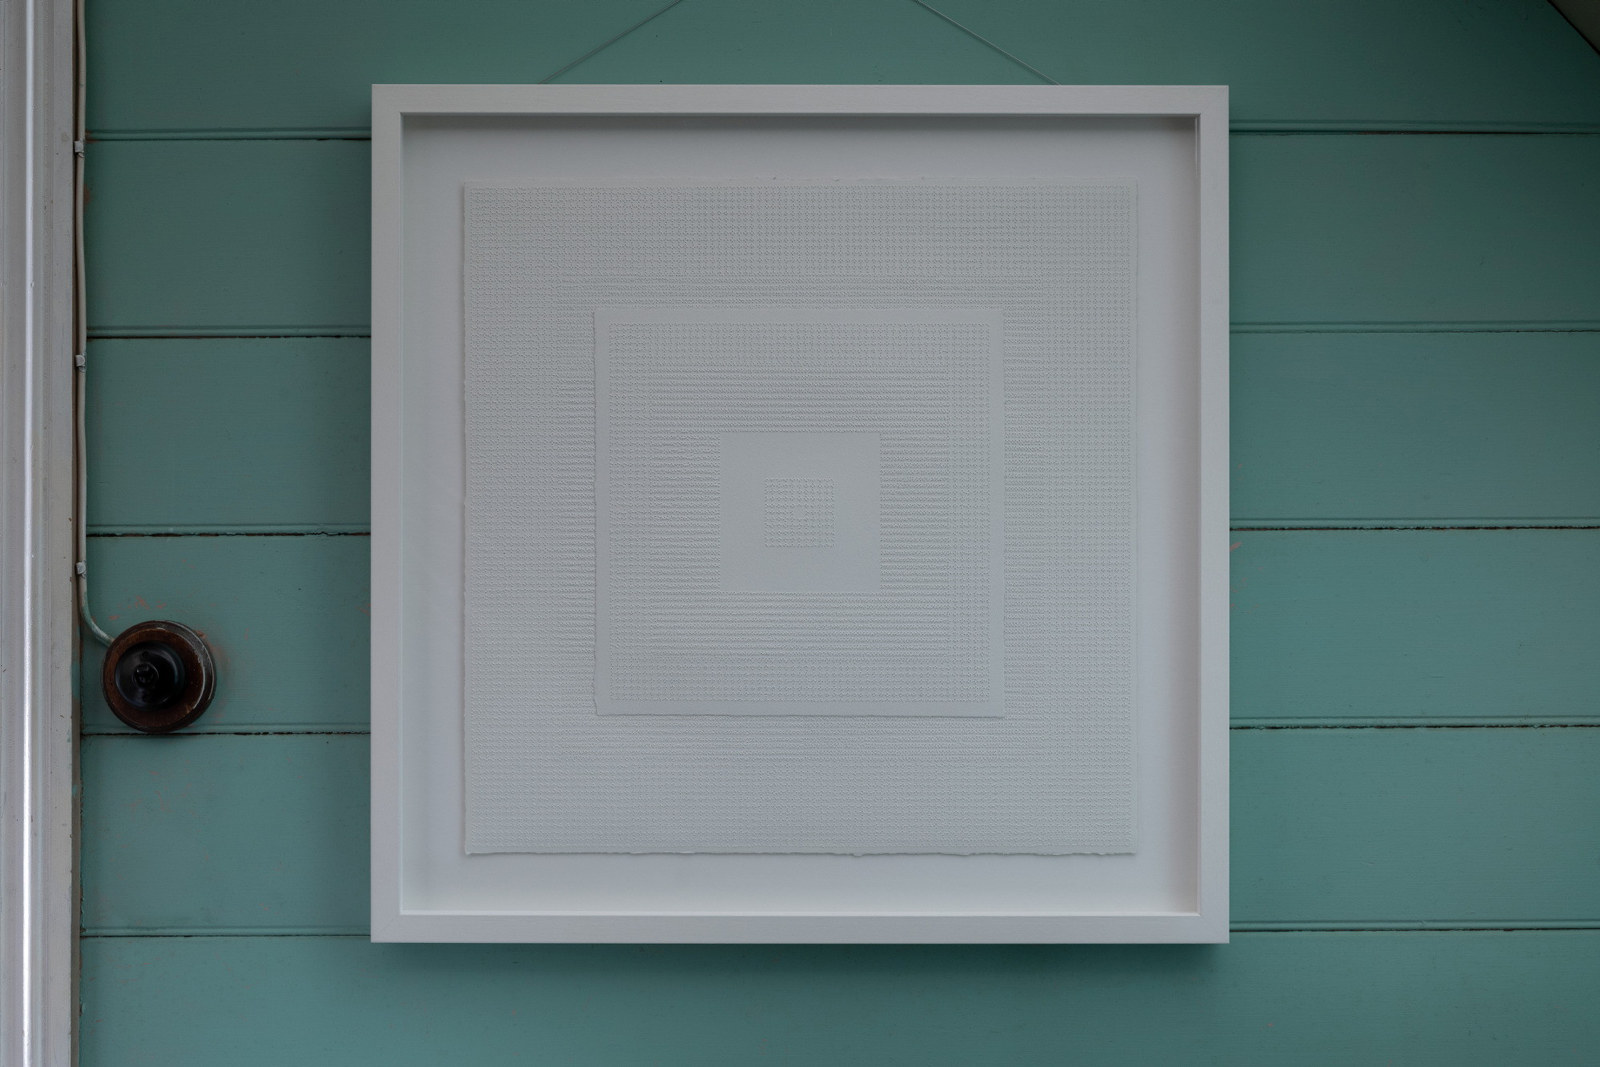 Artwork photographed in situ at Meroogal. Perforated paper in frame.